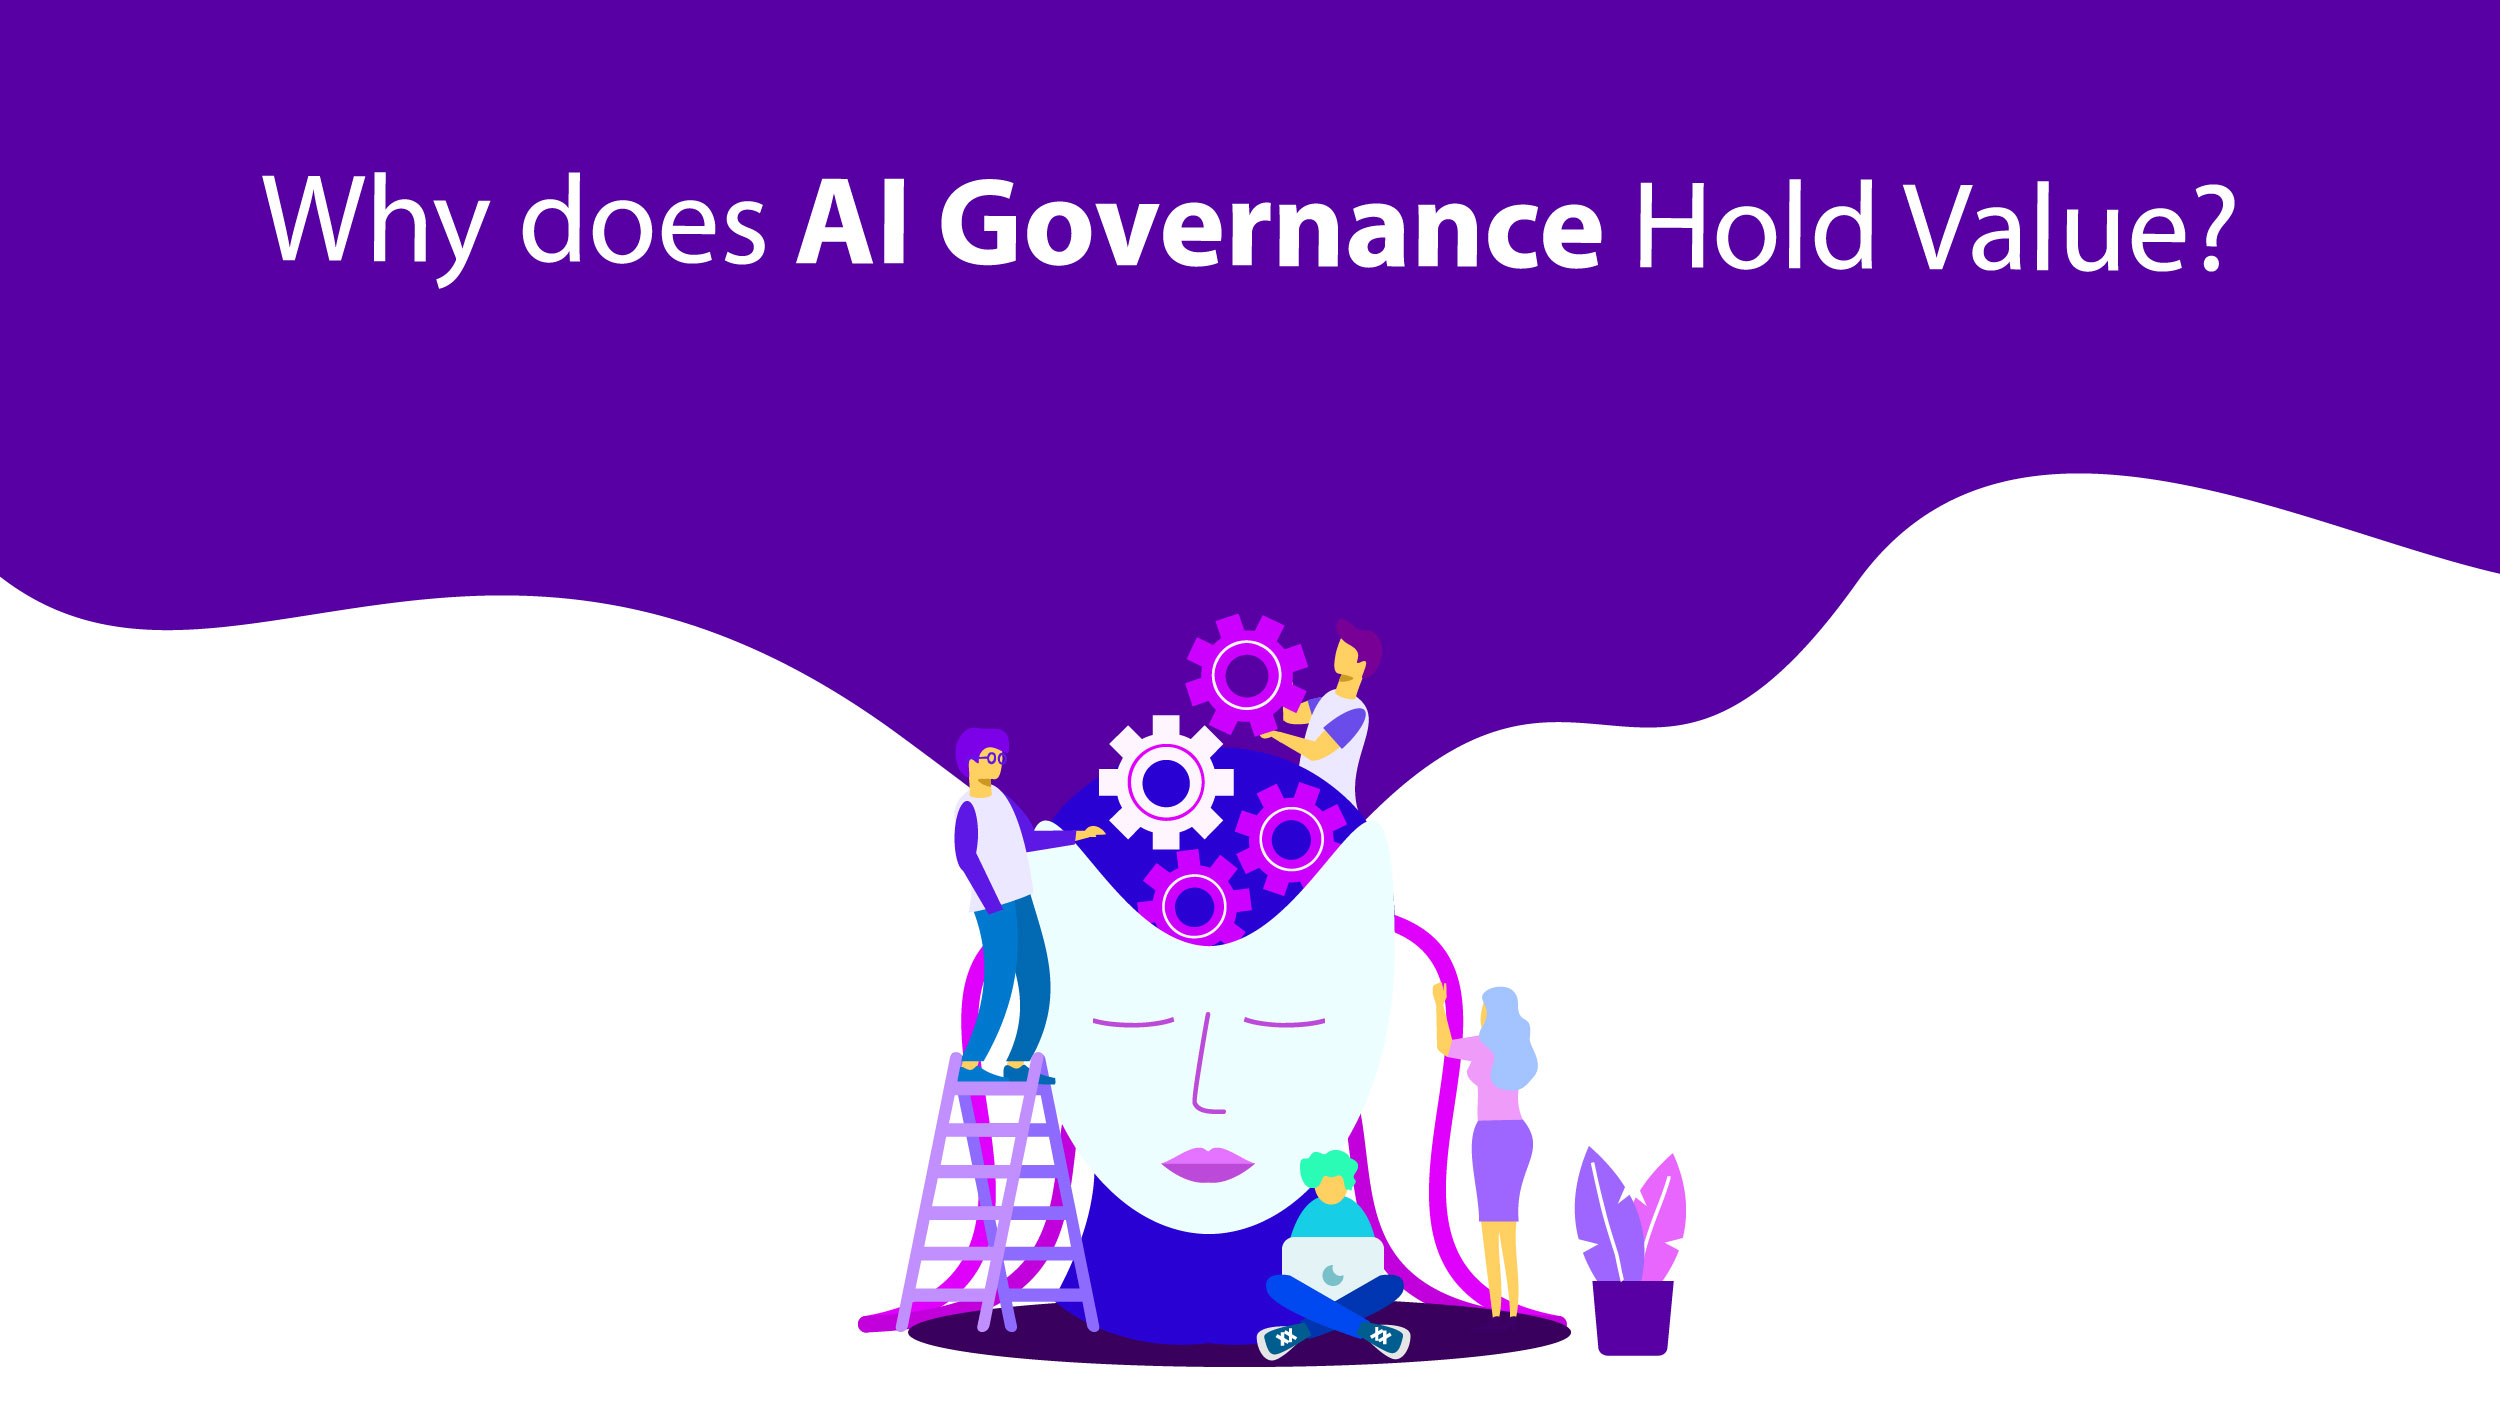 AI governance